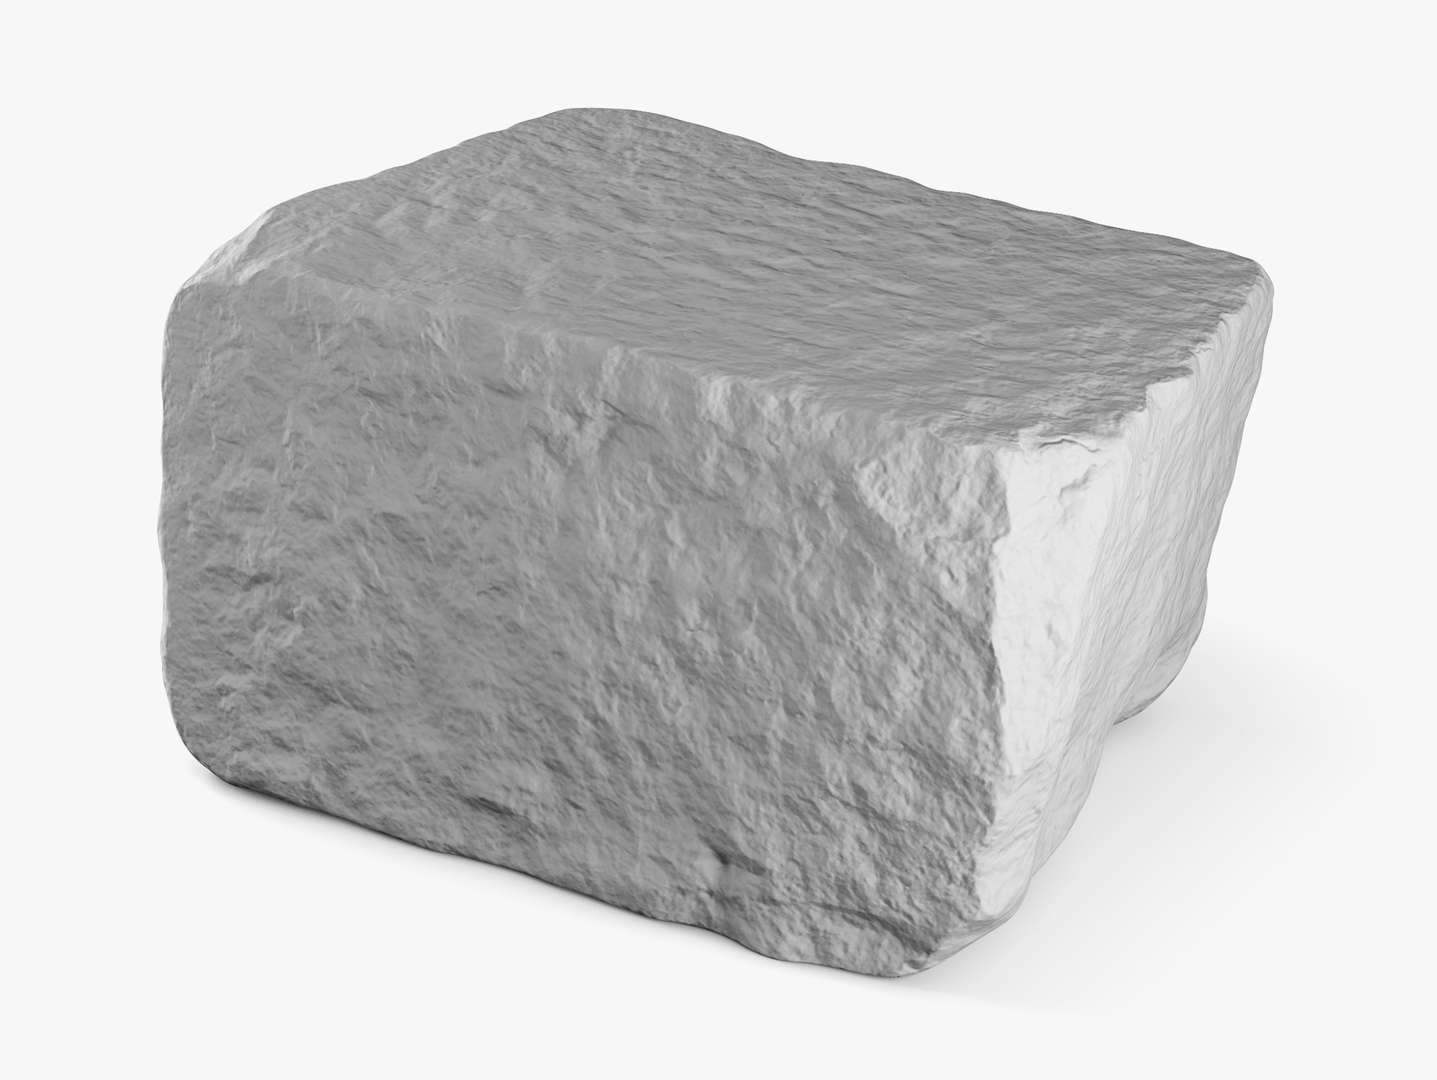 3d Reality Granite Rock Turbosquid 1404820